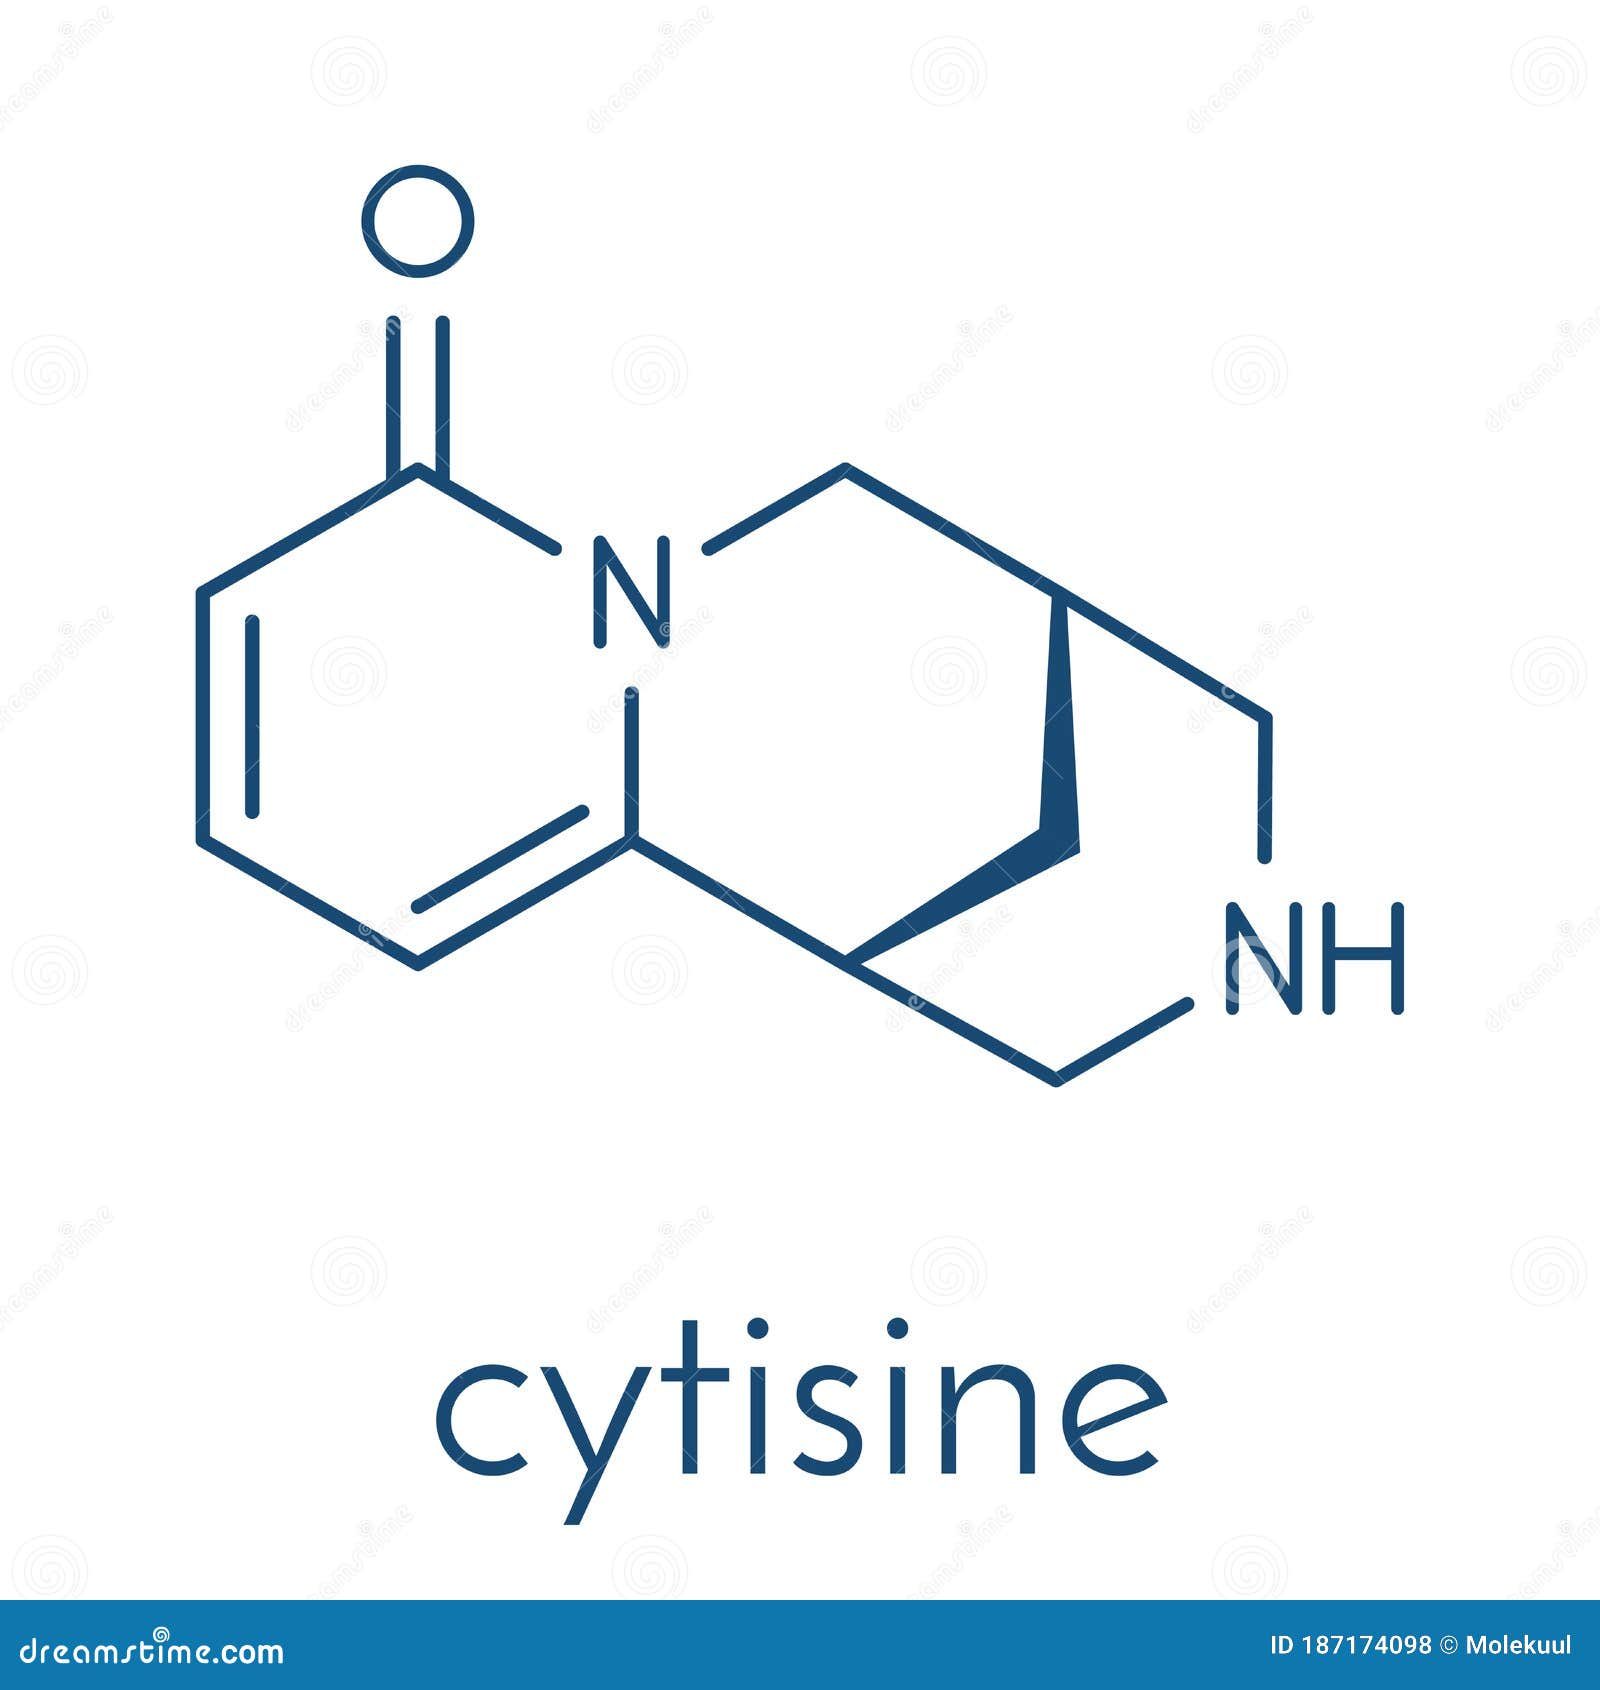 Cytisine - 100 mg - Interprise